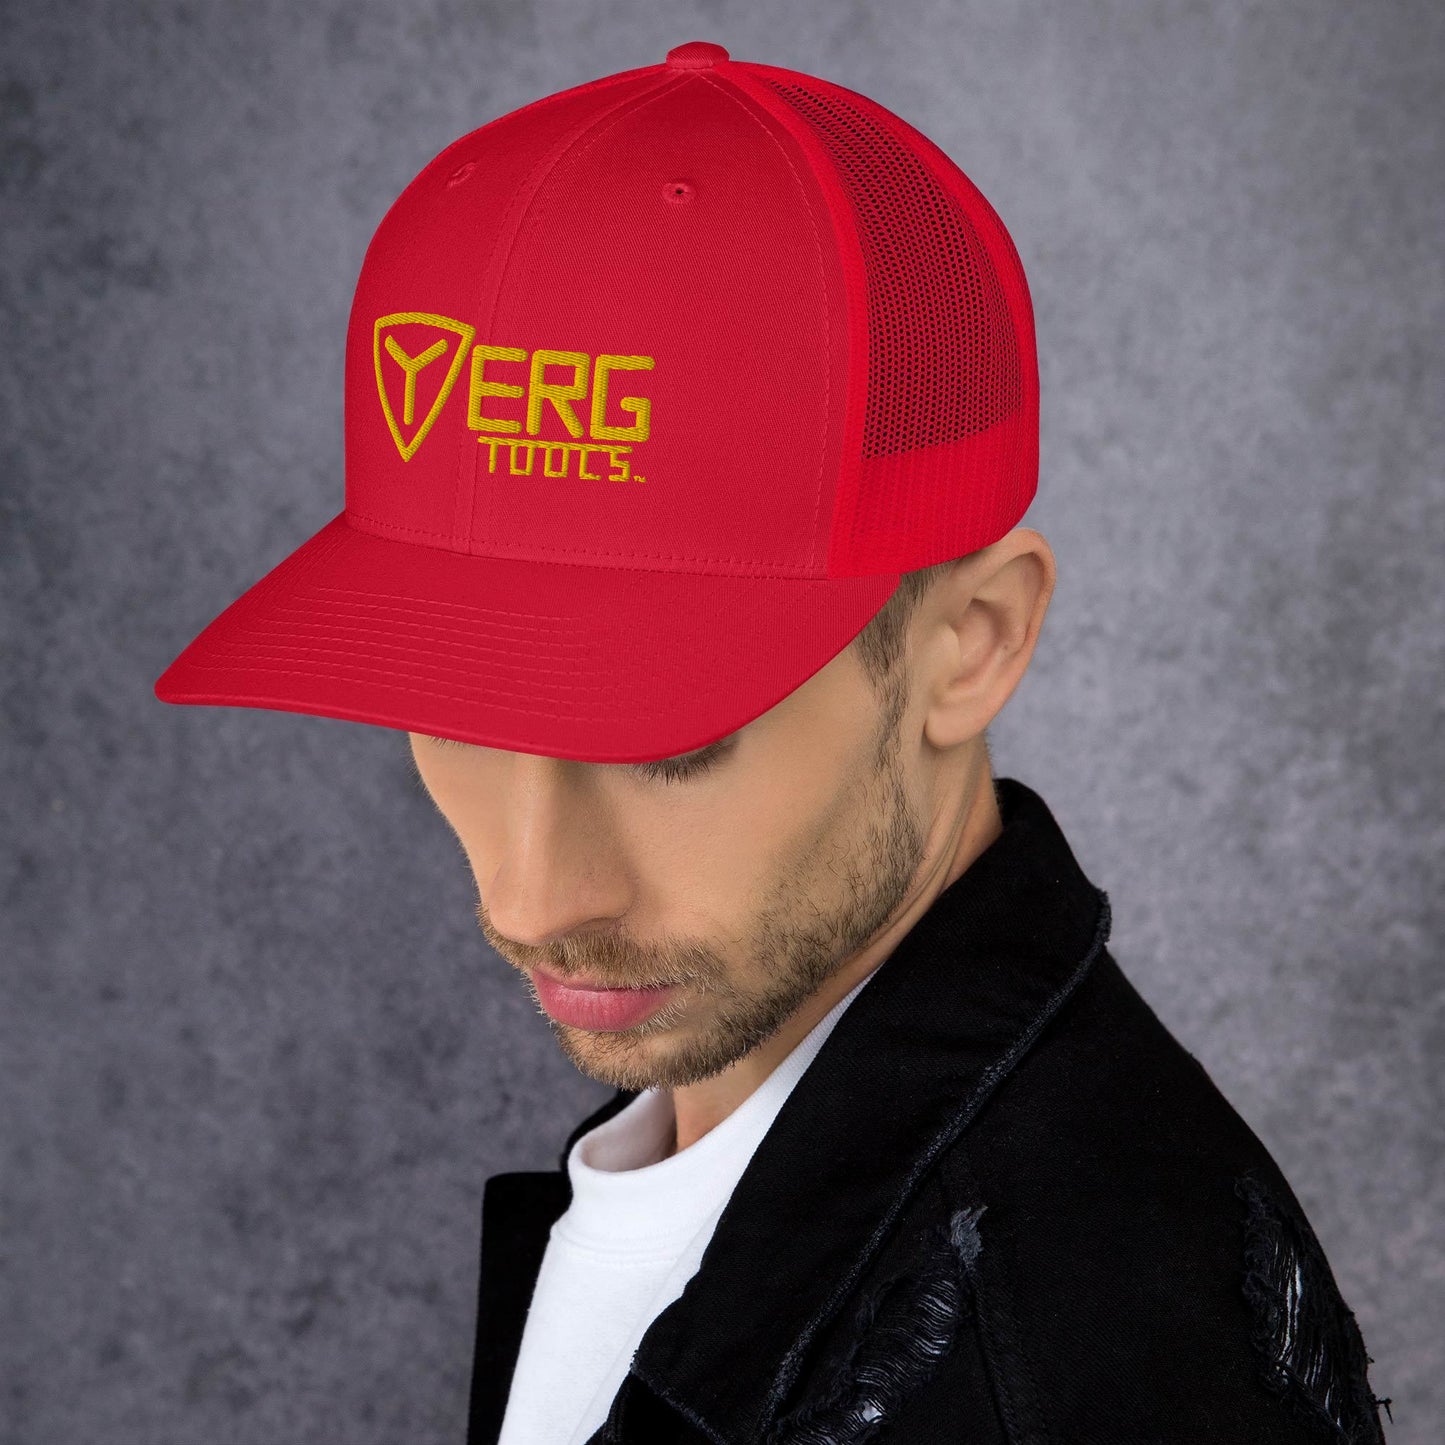 Yerg Tools Gold Logo Mesh Trucker Hat